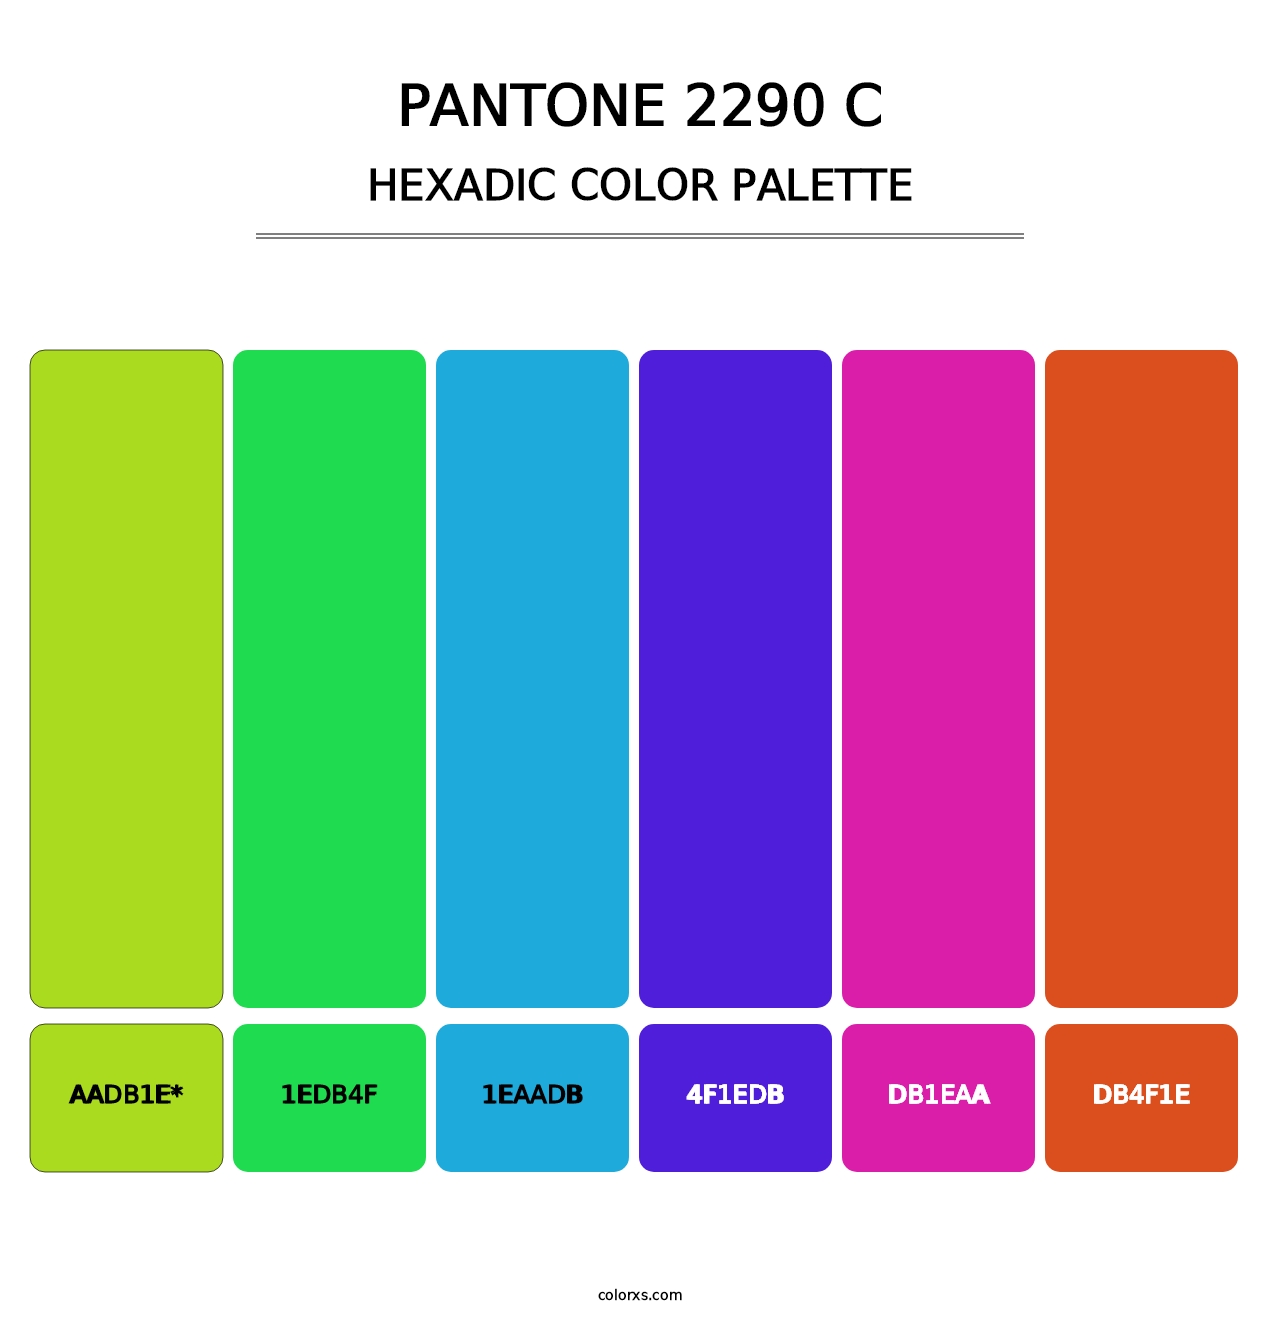 PANTONE 2290 C - Hexadic Color Palette